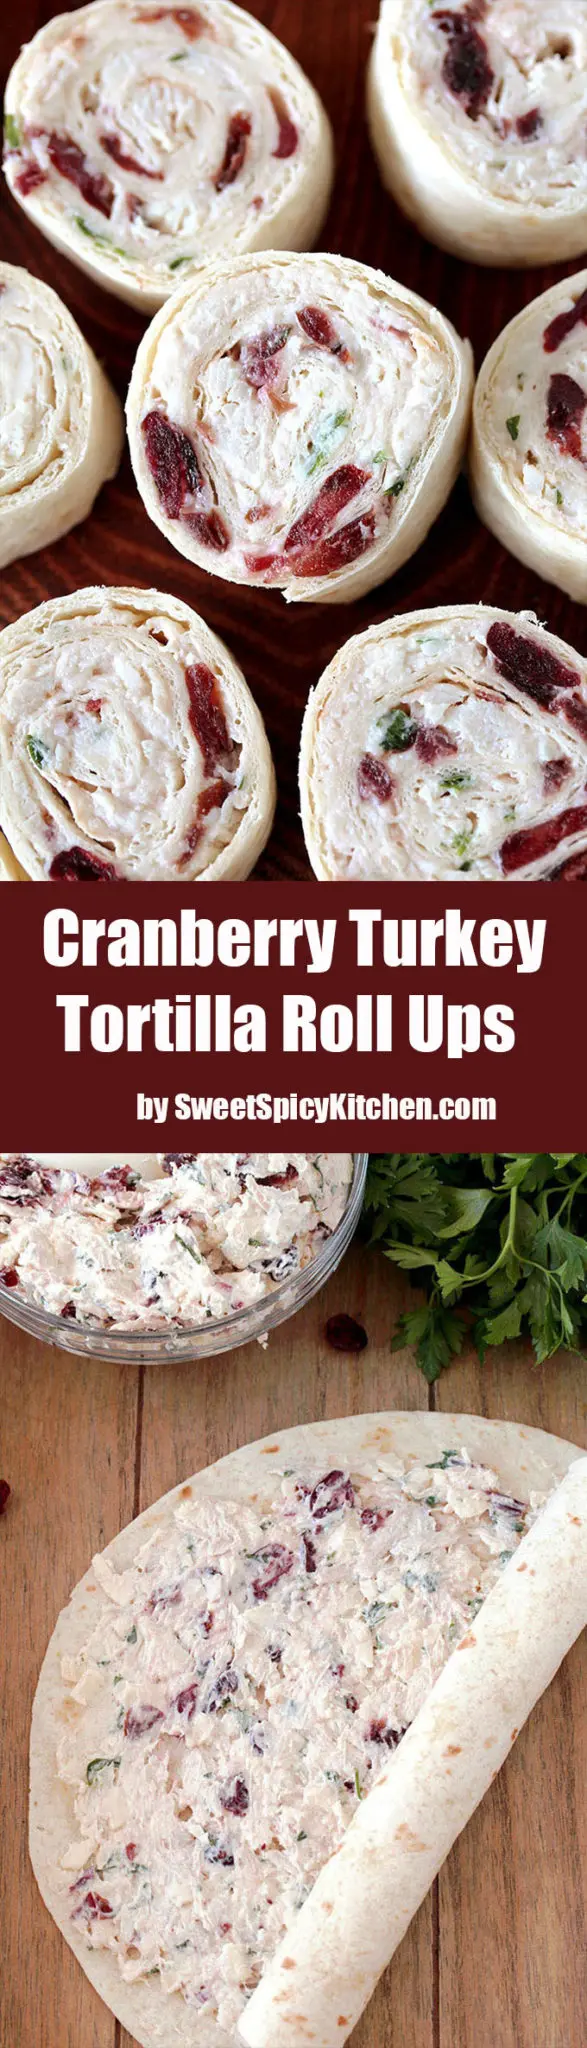 Cranberry Turkey Tortilla Roll Ups